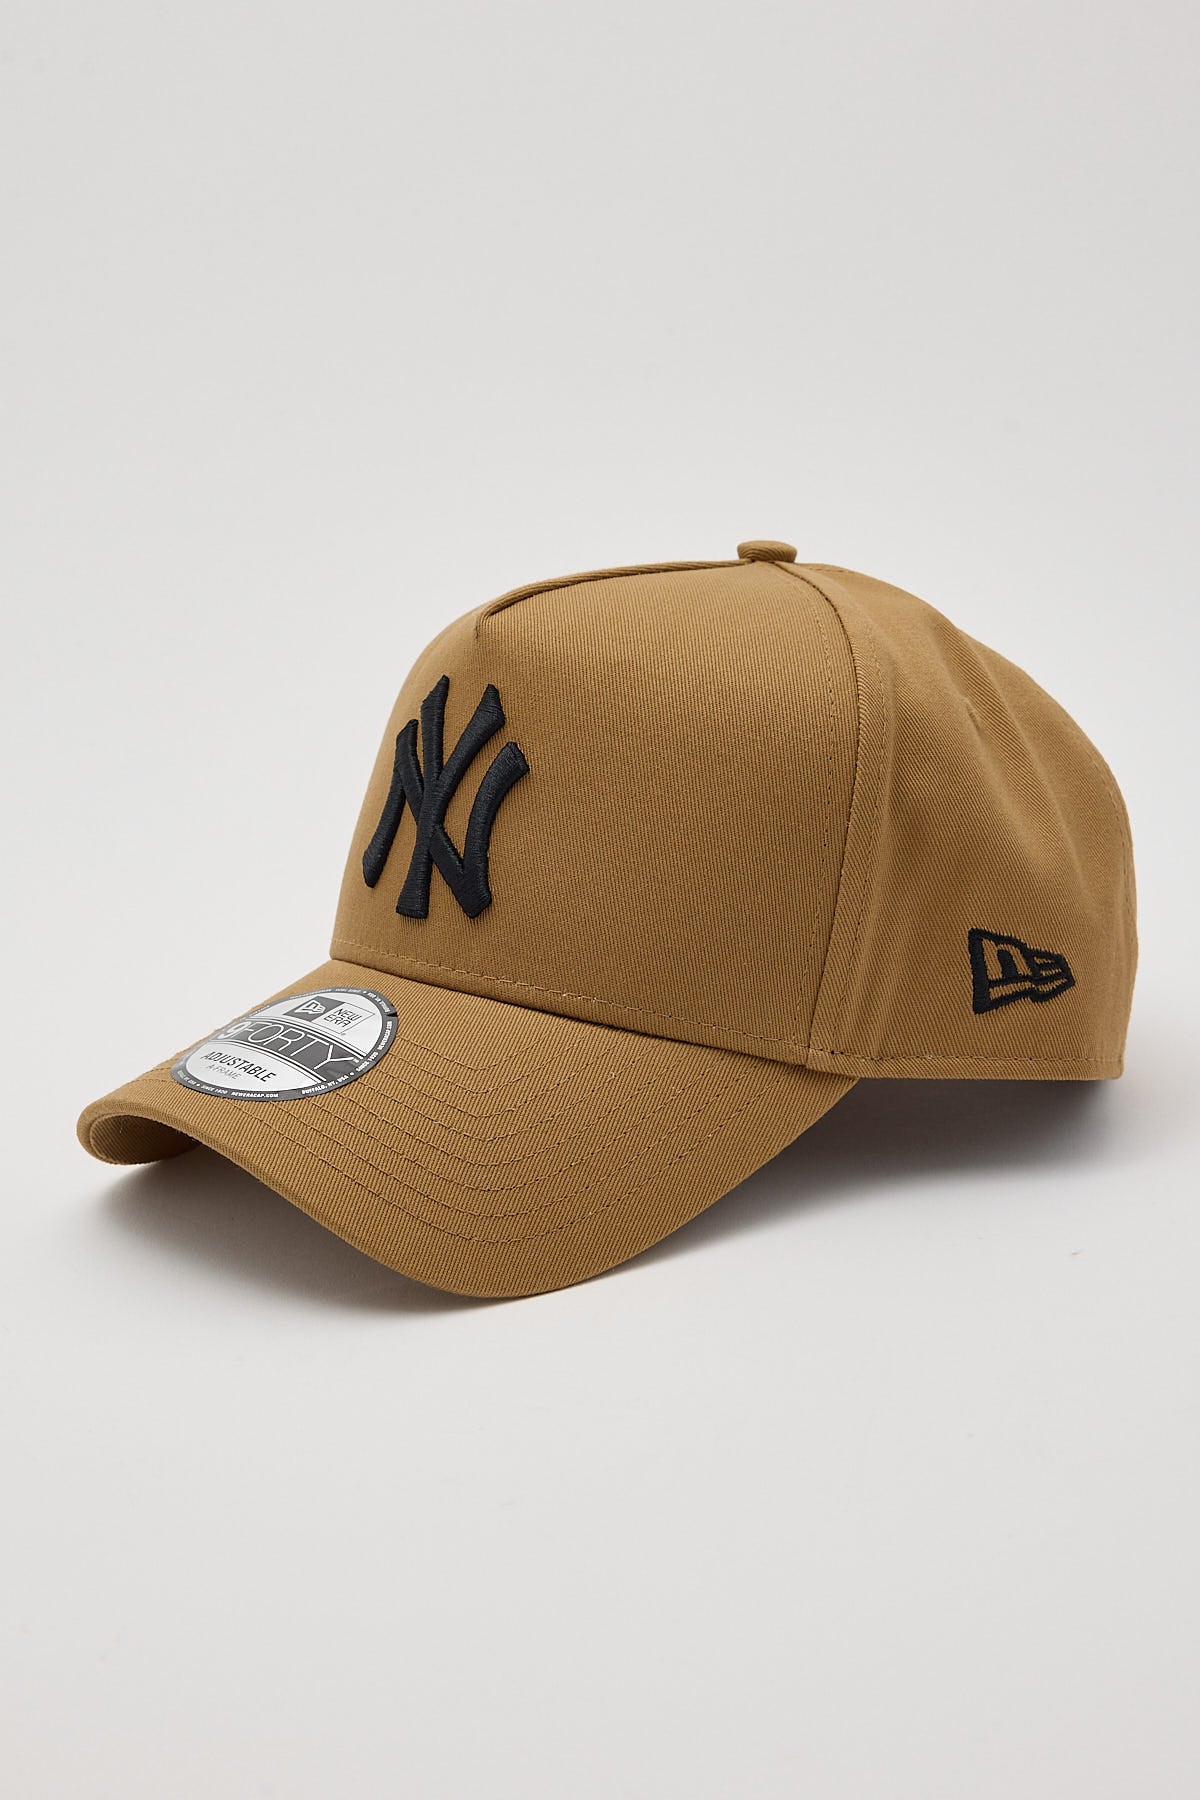 New Era 9Forty AFrame New York Yankees Cap Wheat/Black